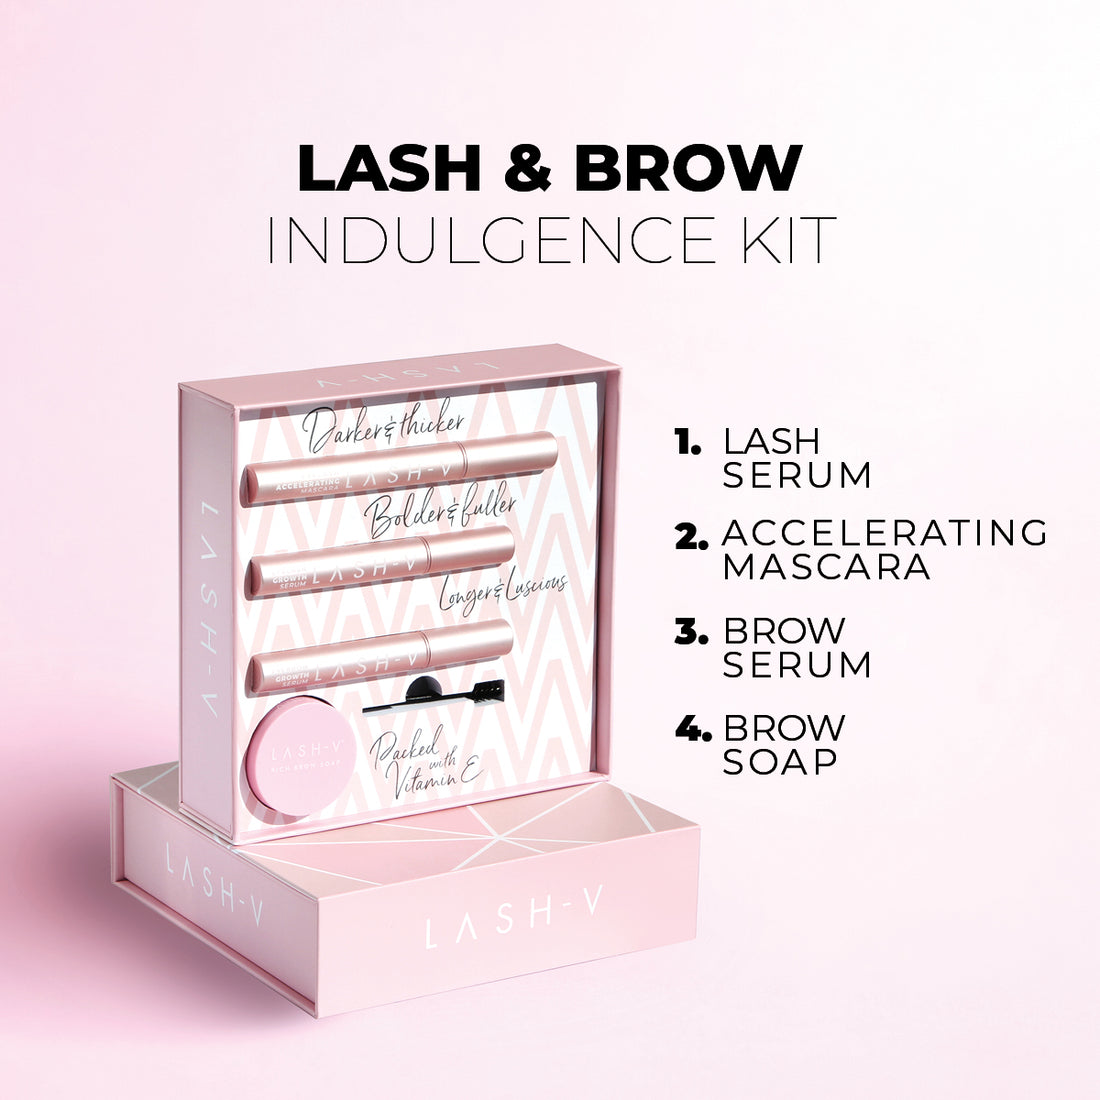 Combo Kit - Lash & Brow Indulgence Kit - LASH & BROW GROWTH SERUMS + MASCARA + BROW SOAP  OneVSalon   